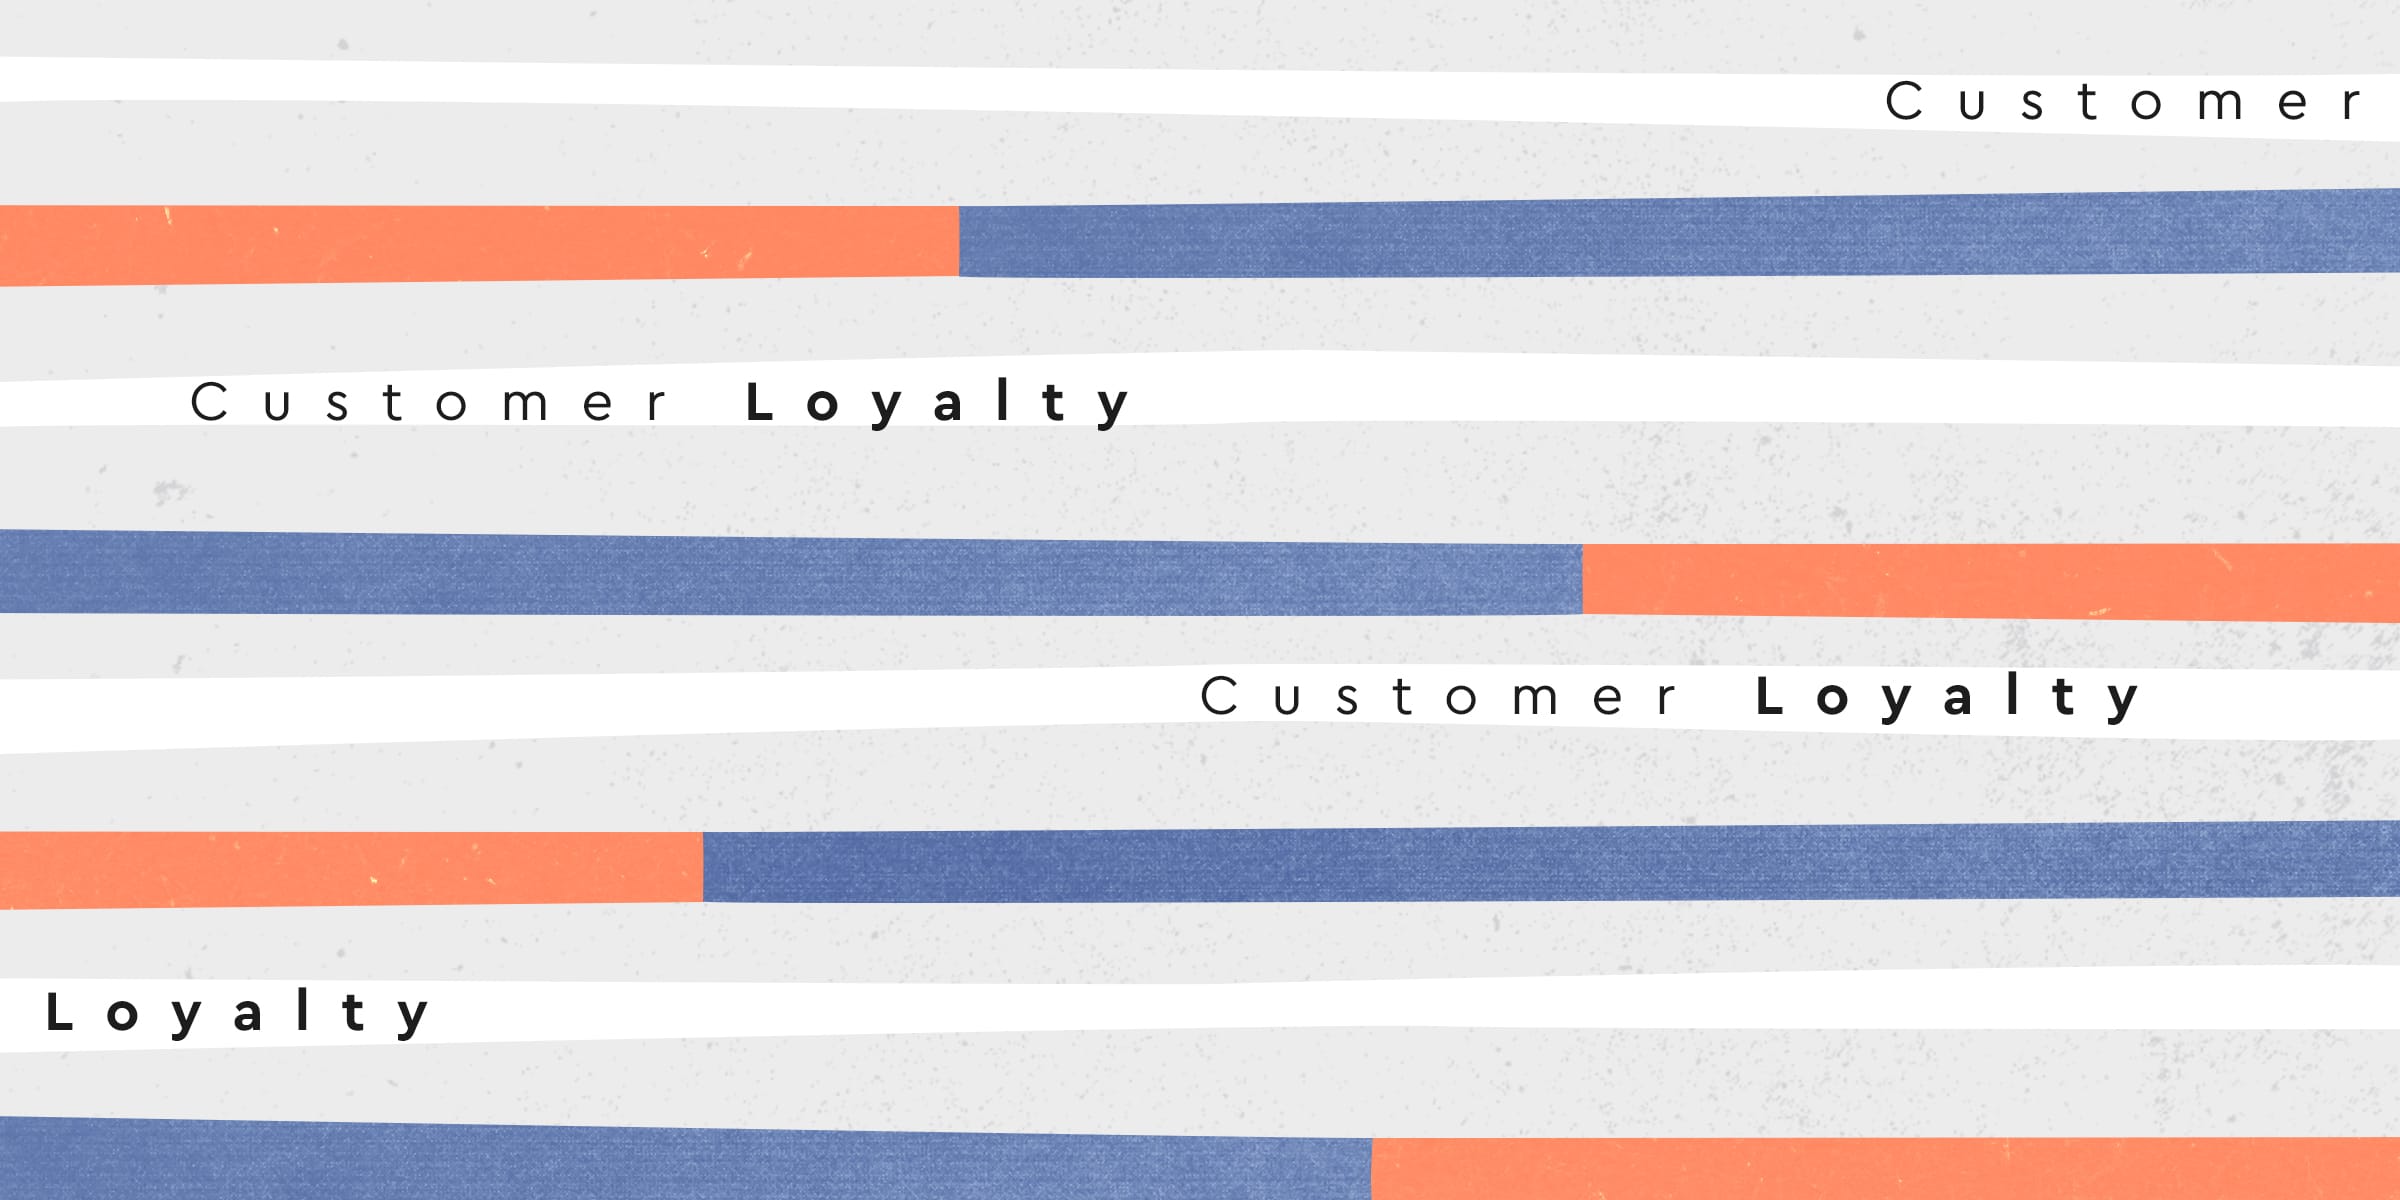 Smart CRM Basics: Strategies for Increasing Customer Loyalty